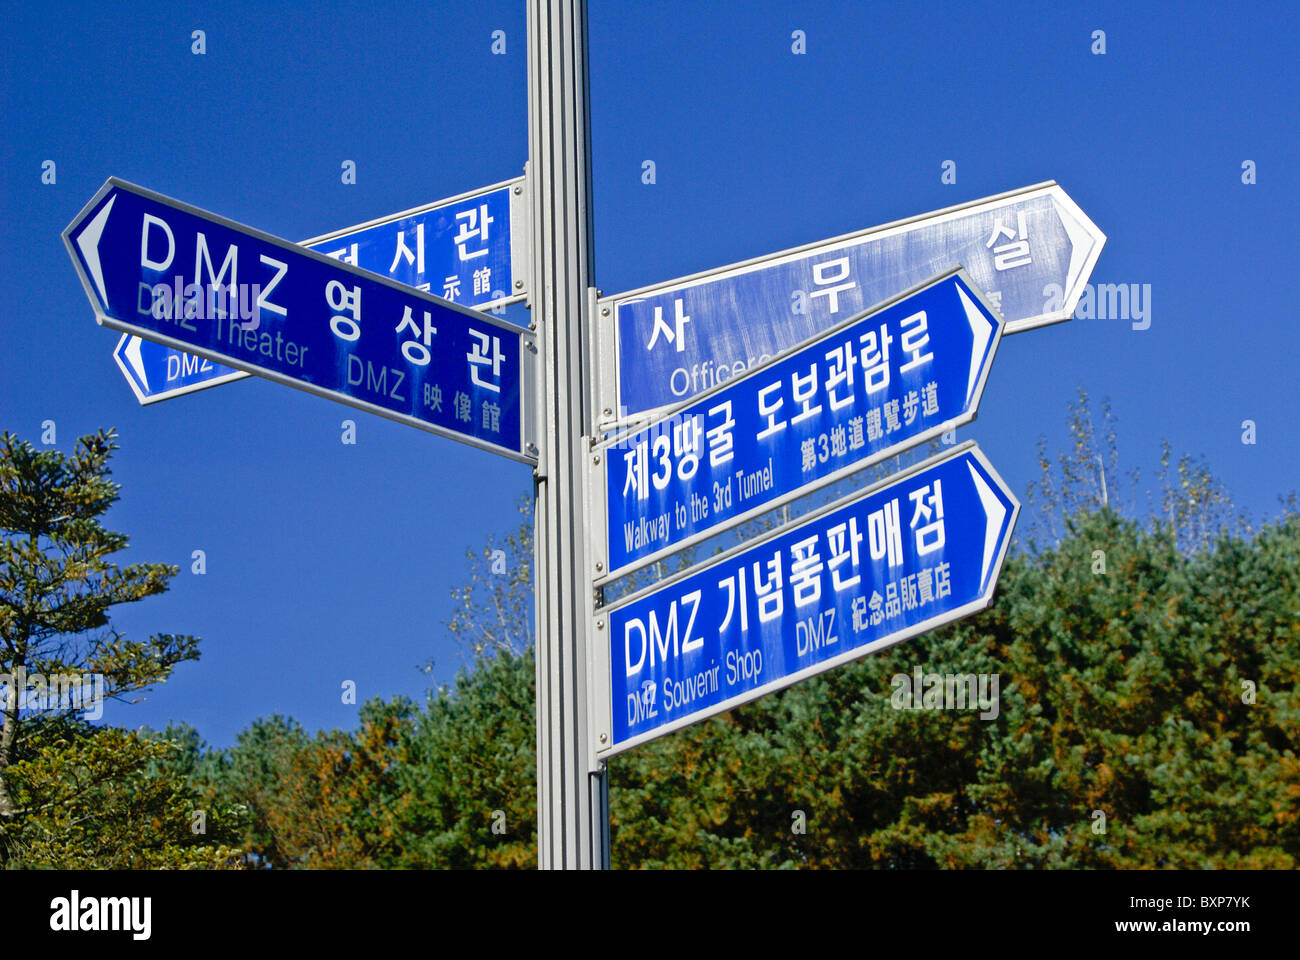 Directional sign at DMZ, South Korea, in three languages (English, Korean, Chinese) Stock Photo